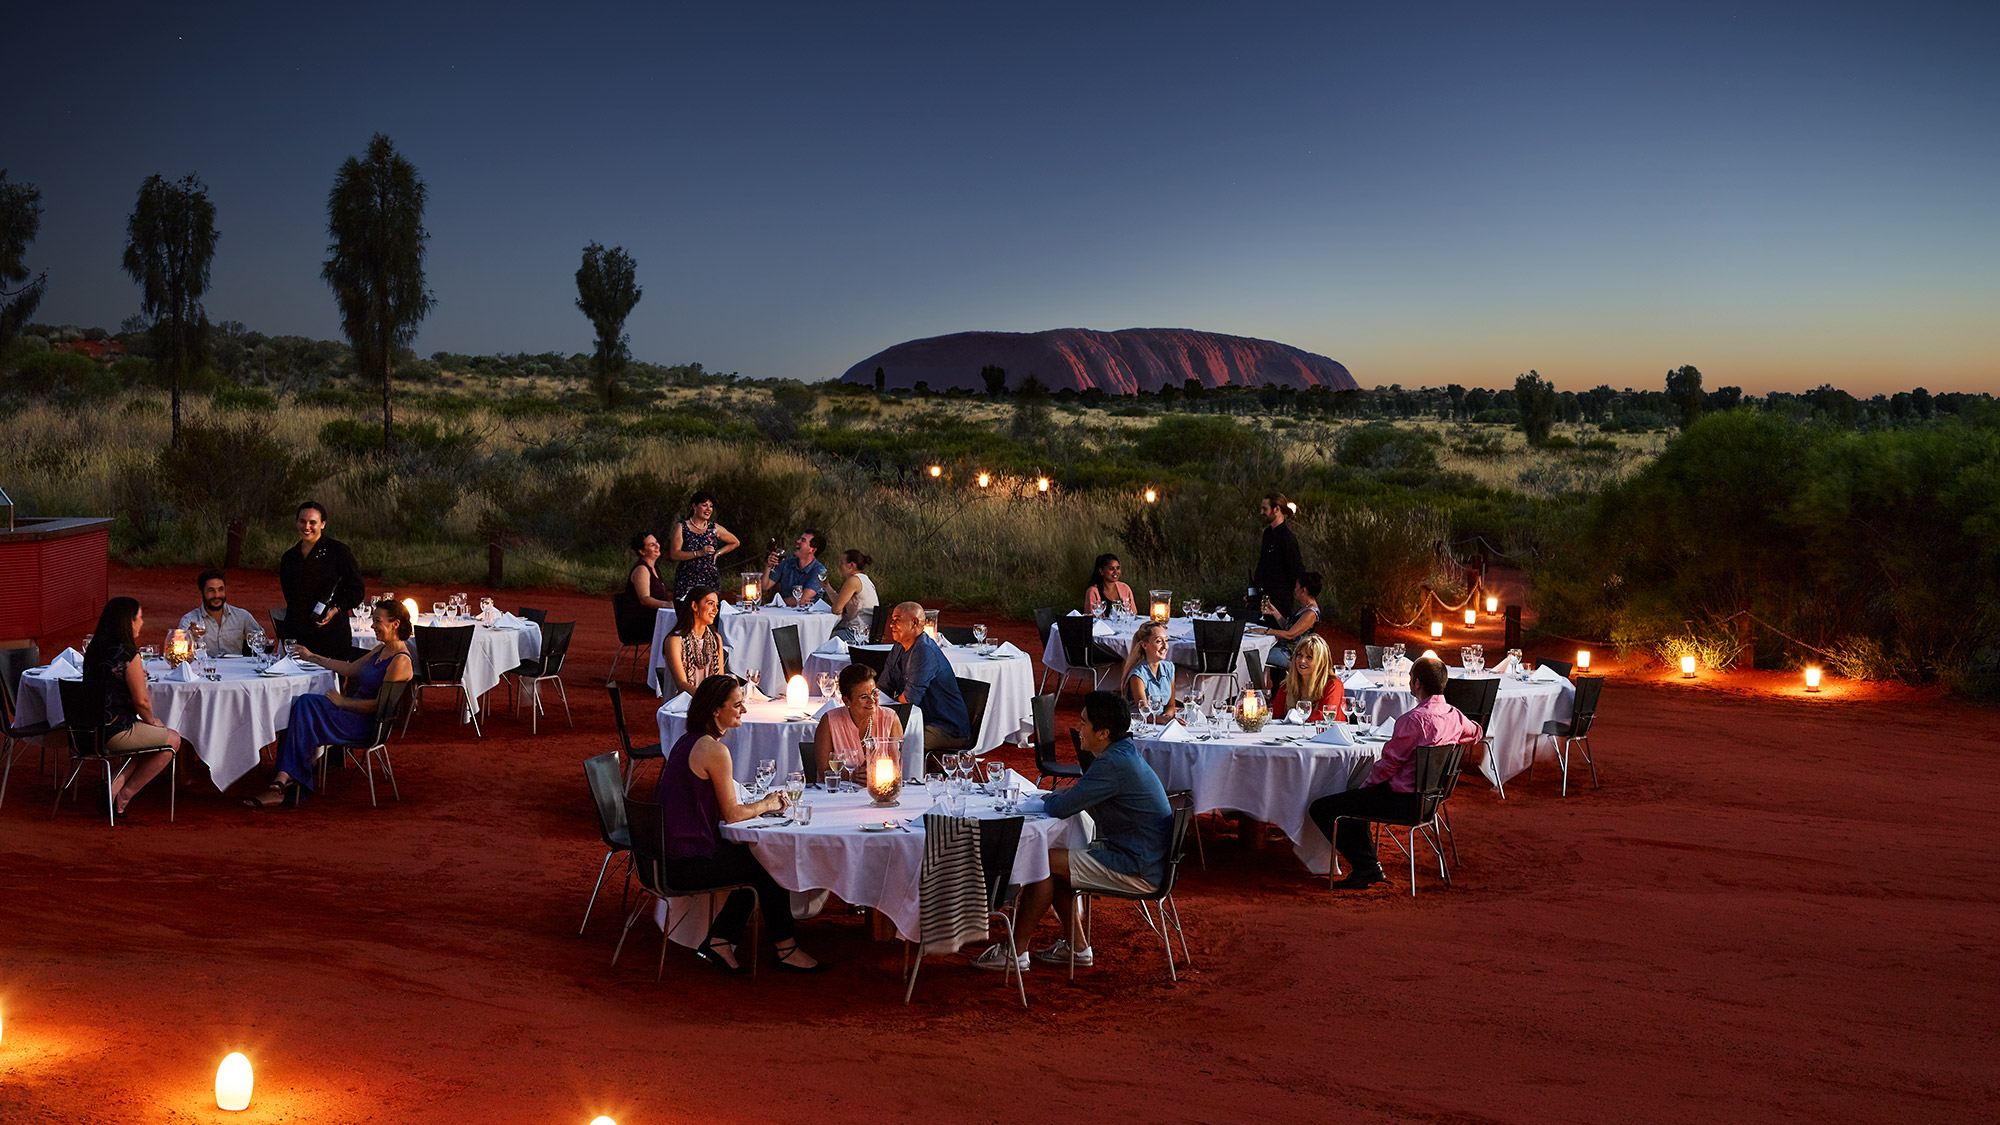 New Year's Eve Exclusive Uluru Private Charter Weekend Getaway Departing Perth